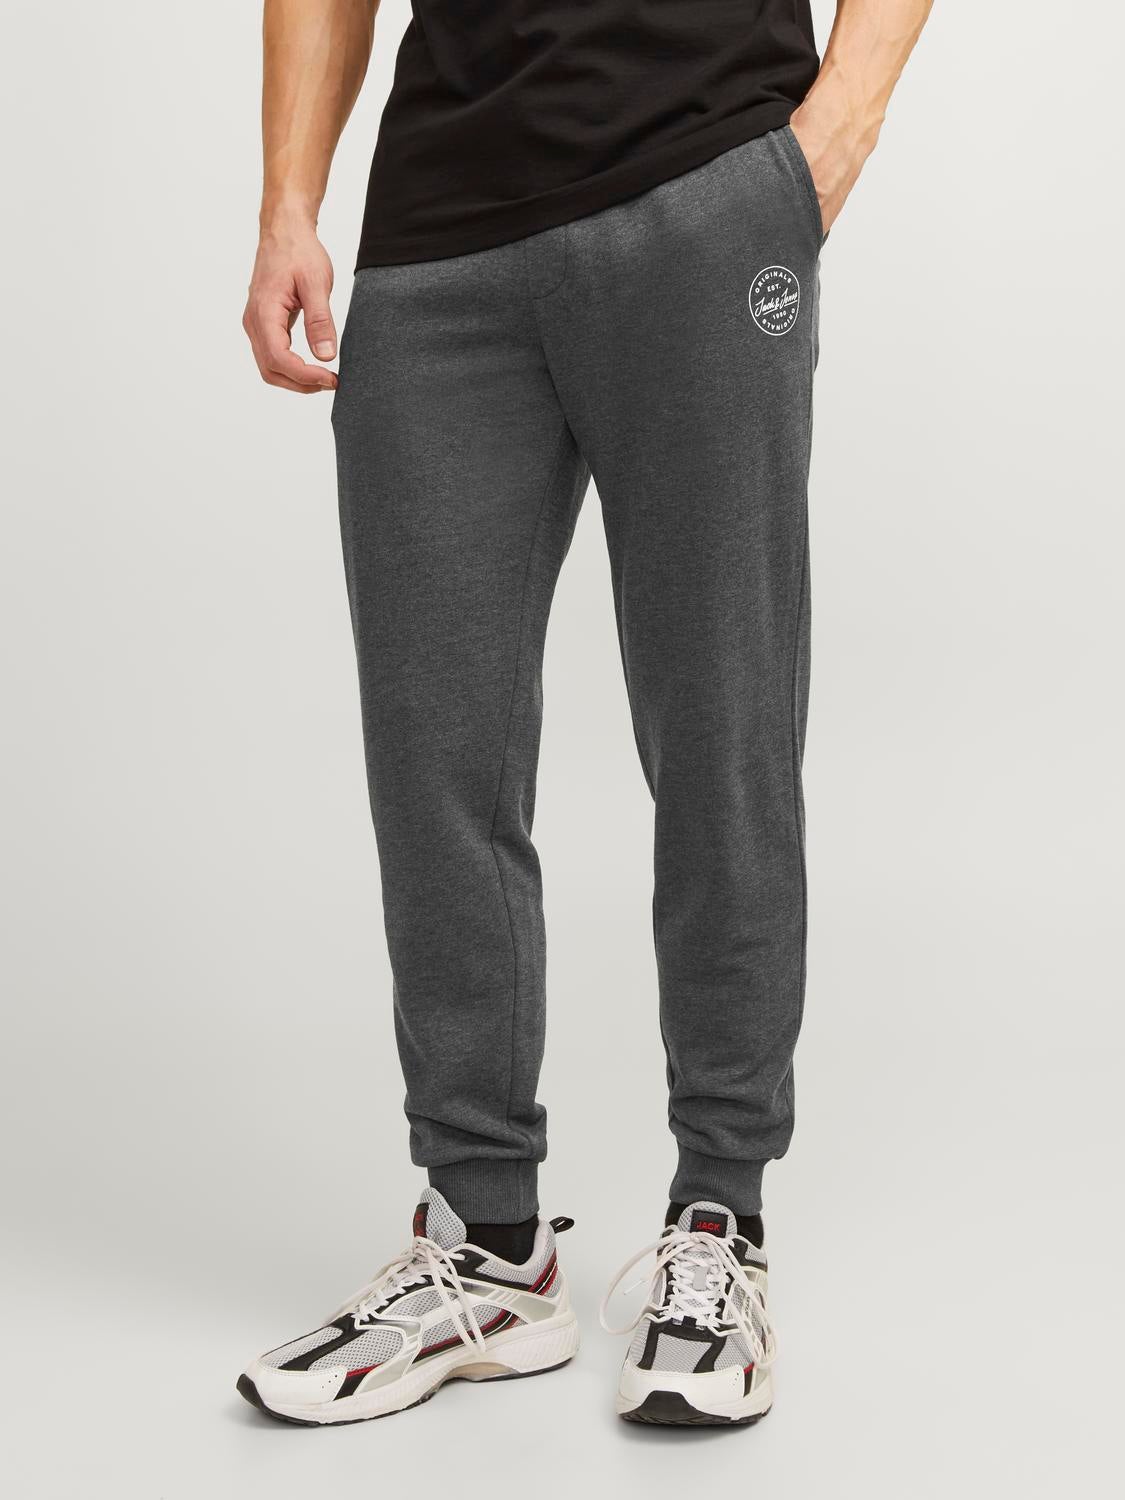 Jack & Jones Mens Joggers Pants Comfort Sweat Track Trousers Slim Fit  Bottomwear | eBay